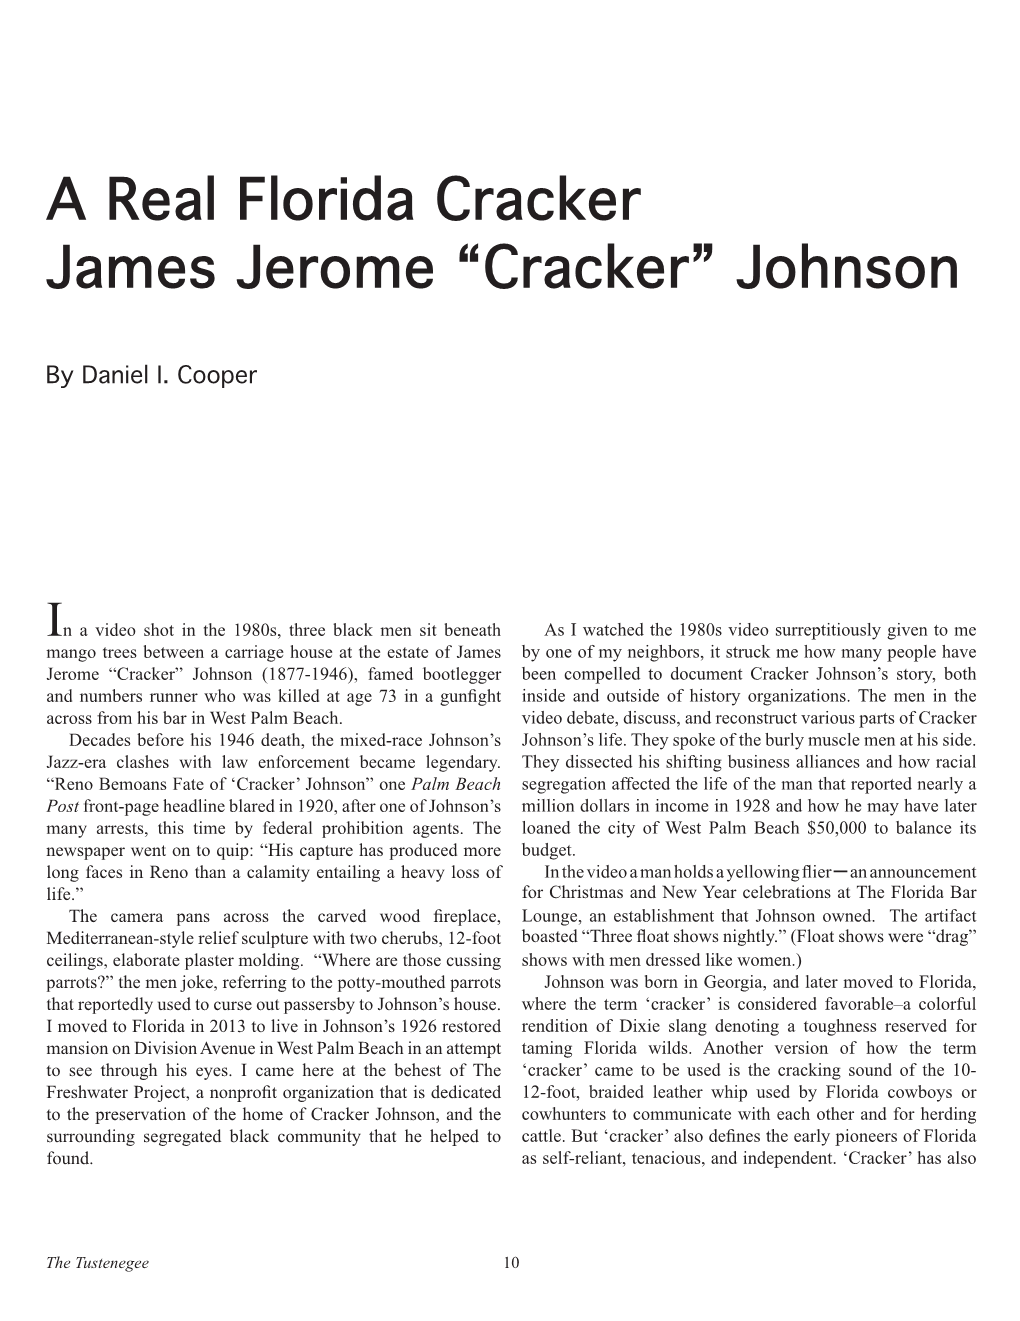 A Real Florida Cracker James Jerome “Cracker” Johnson